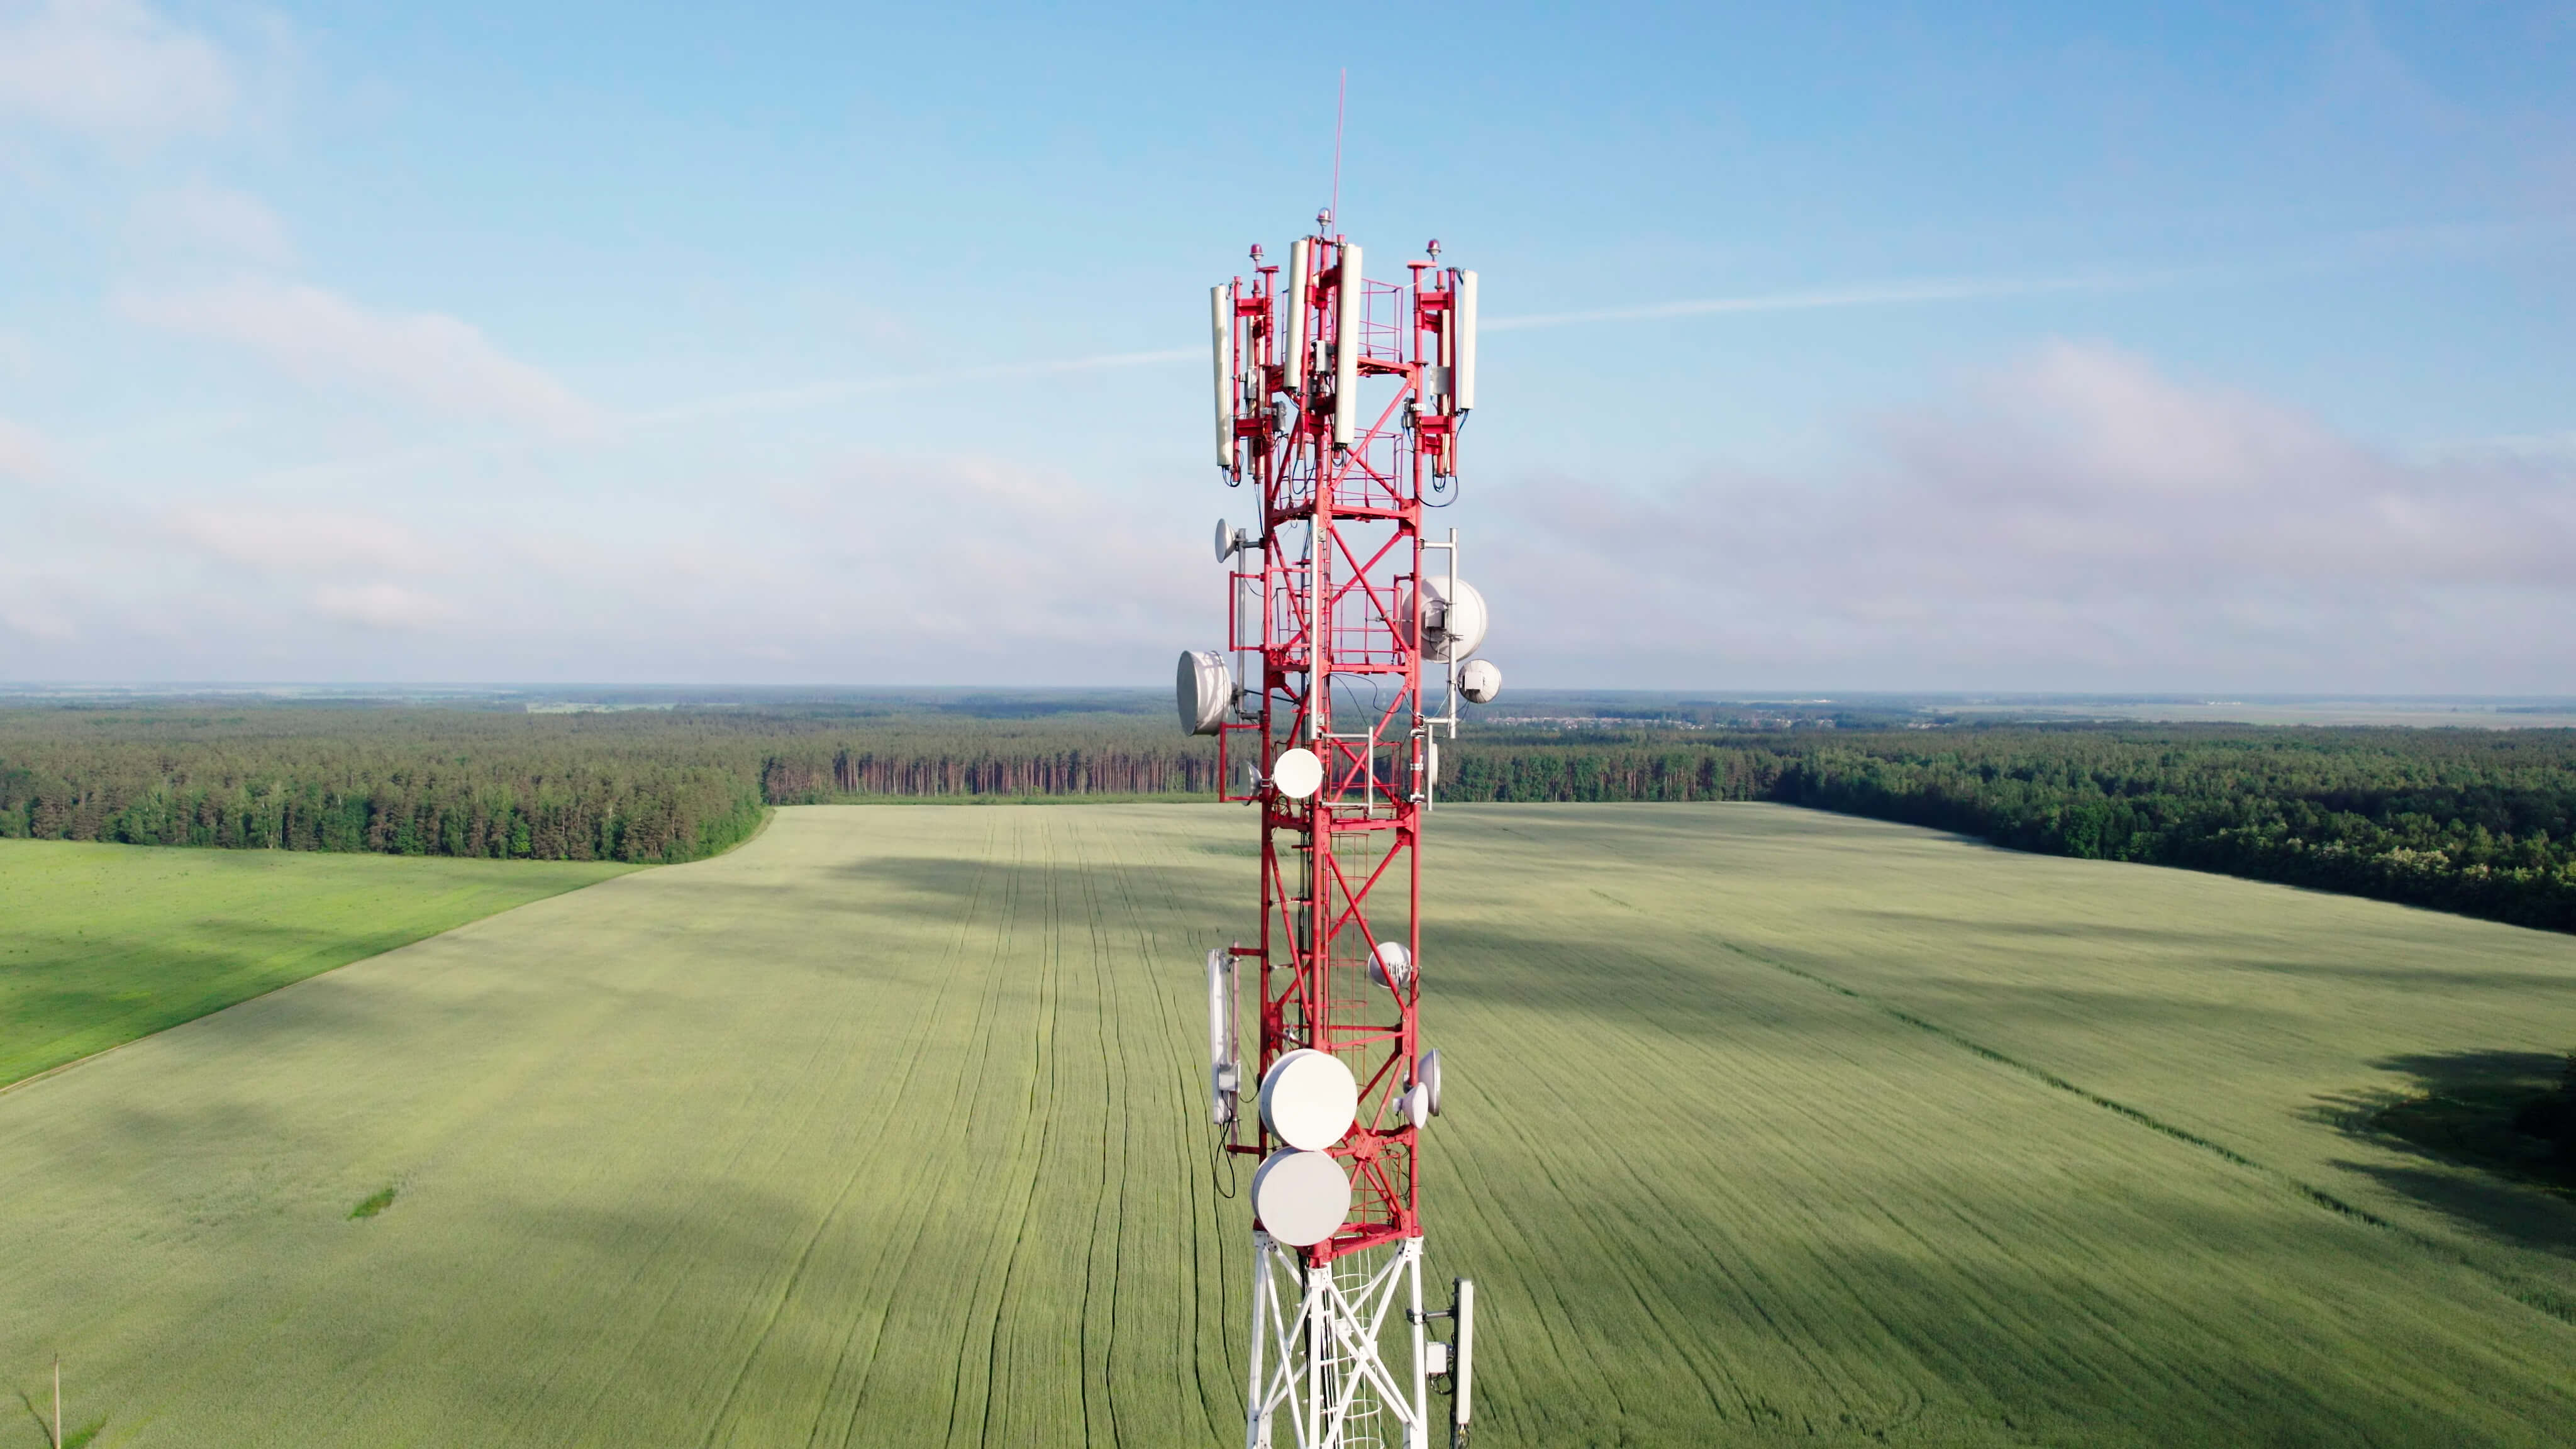 5g Tower in rural area  | Cadrex